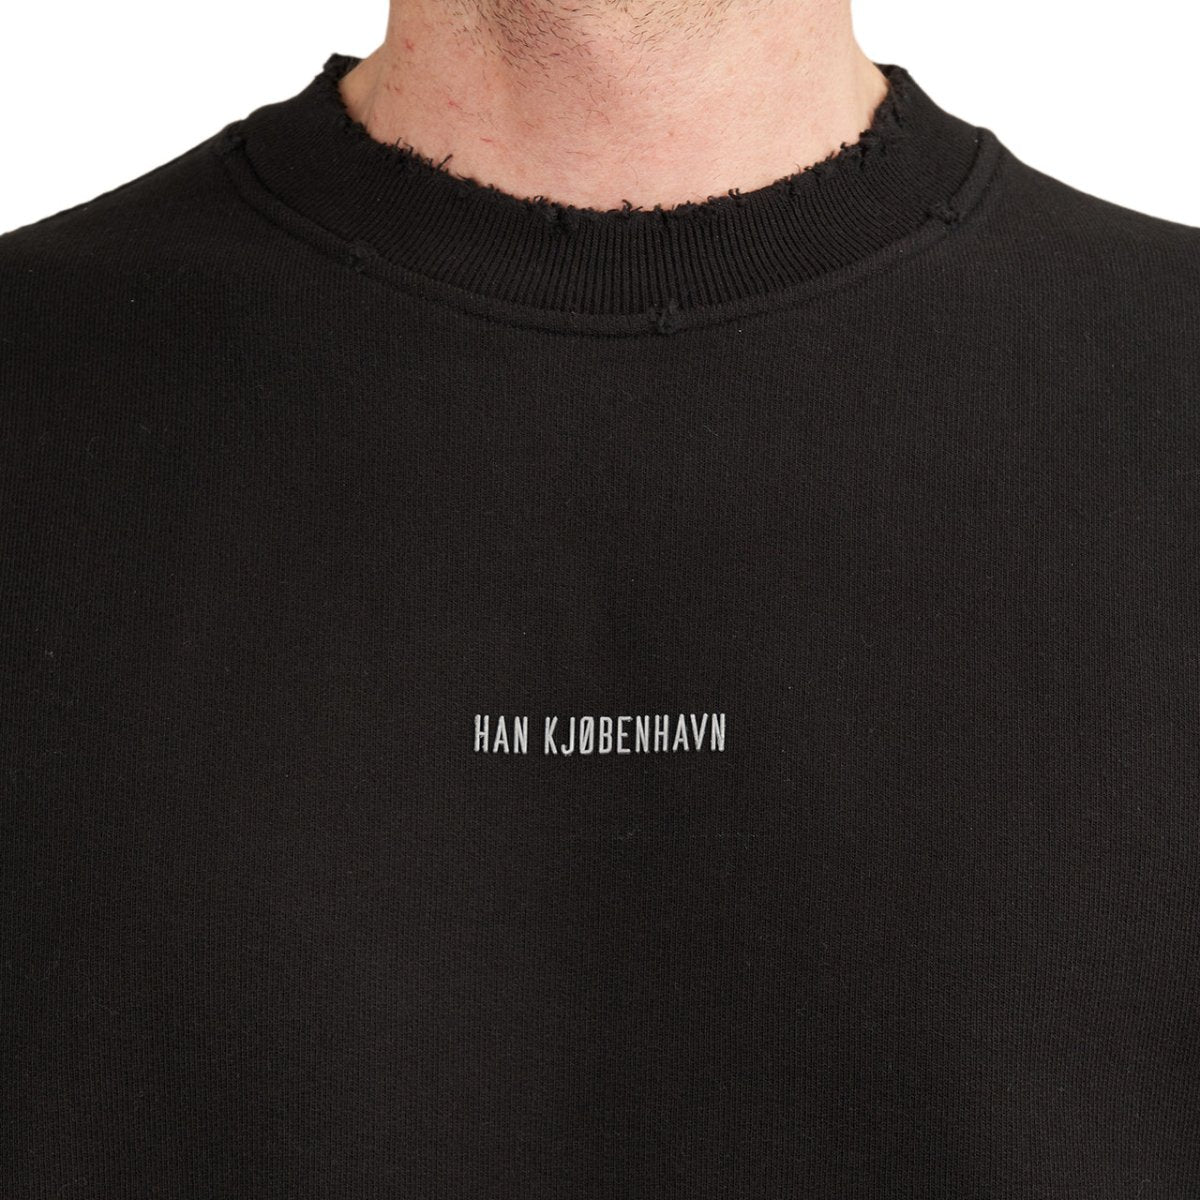 Han Kjobenhavn Distressed Crew Logo (Black)